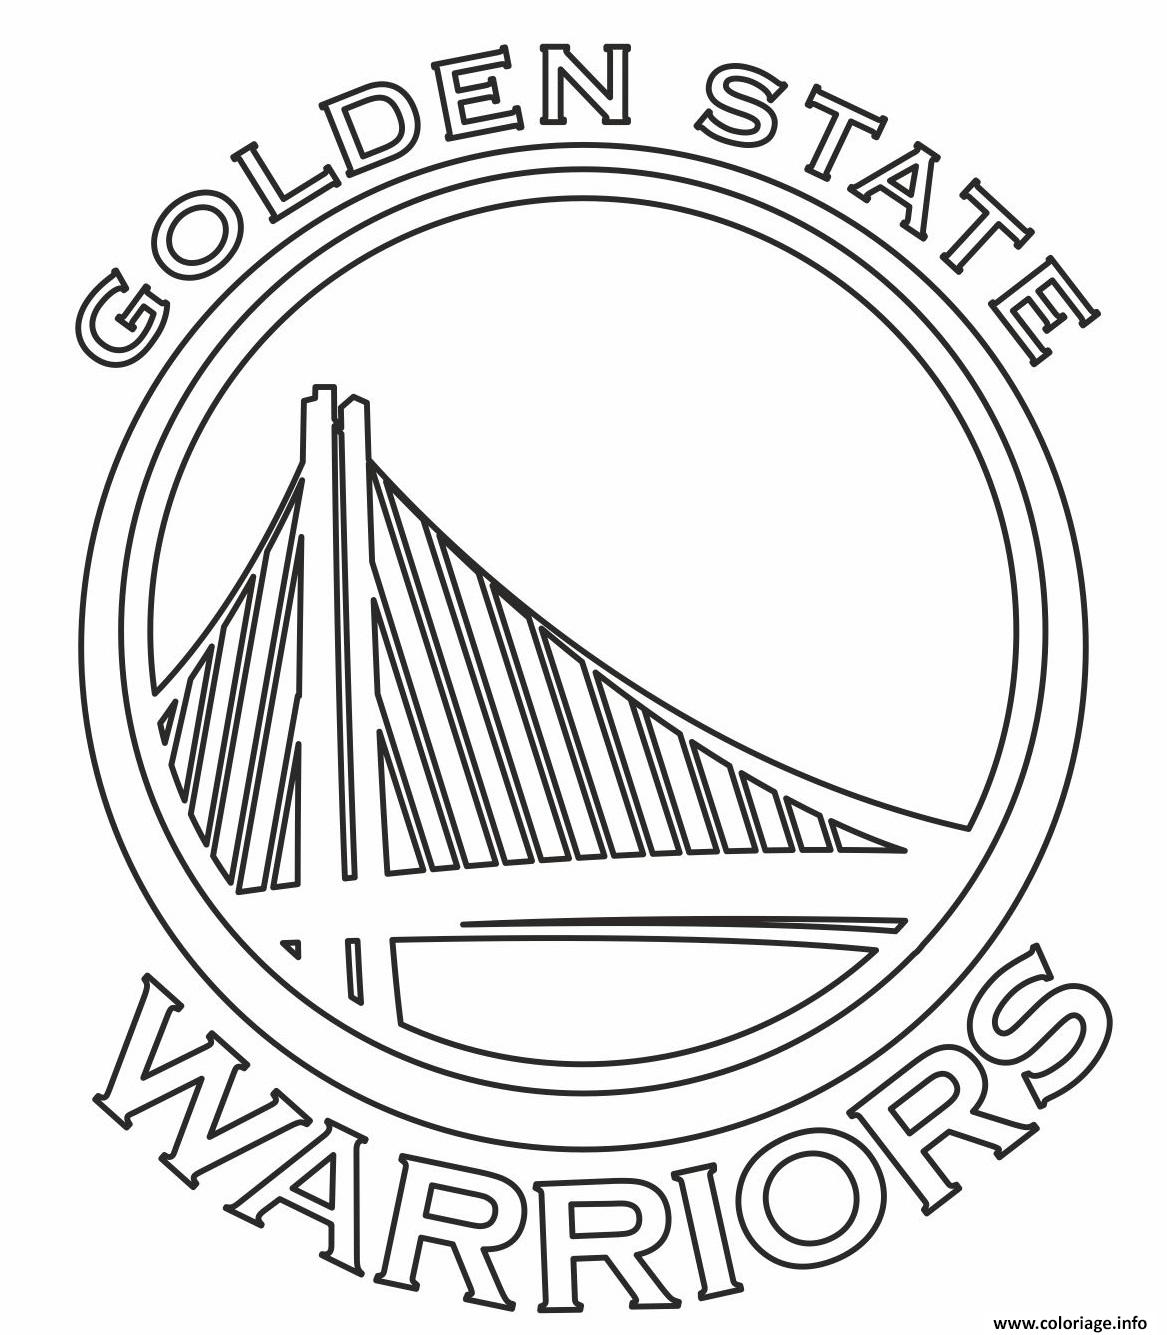 Dessin nba teams logo golden state warriors Coloriage Gratuit à Imprimer